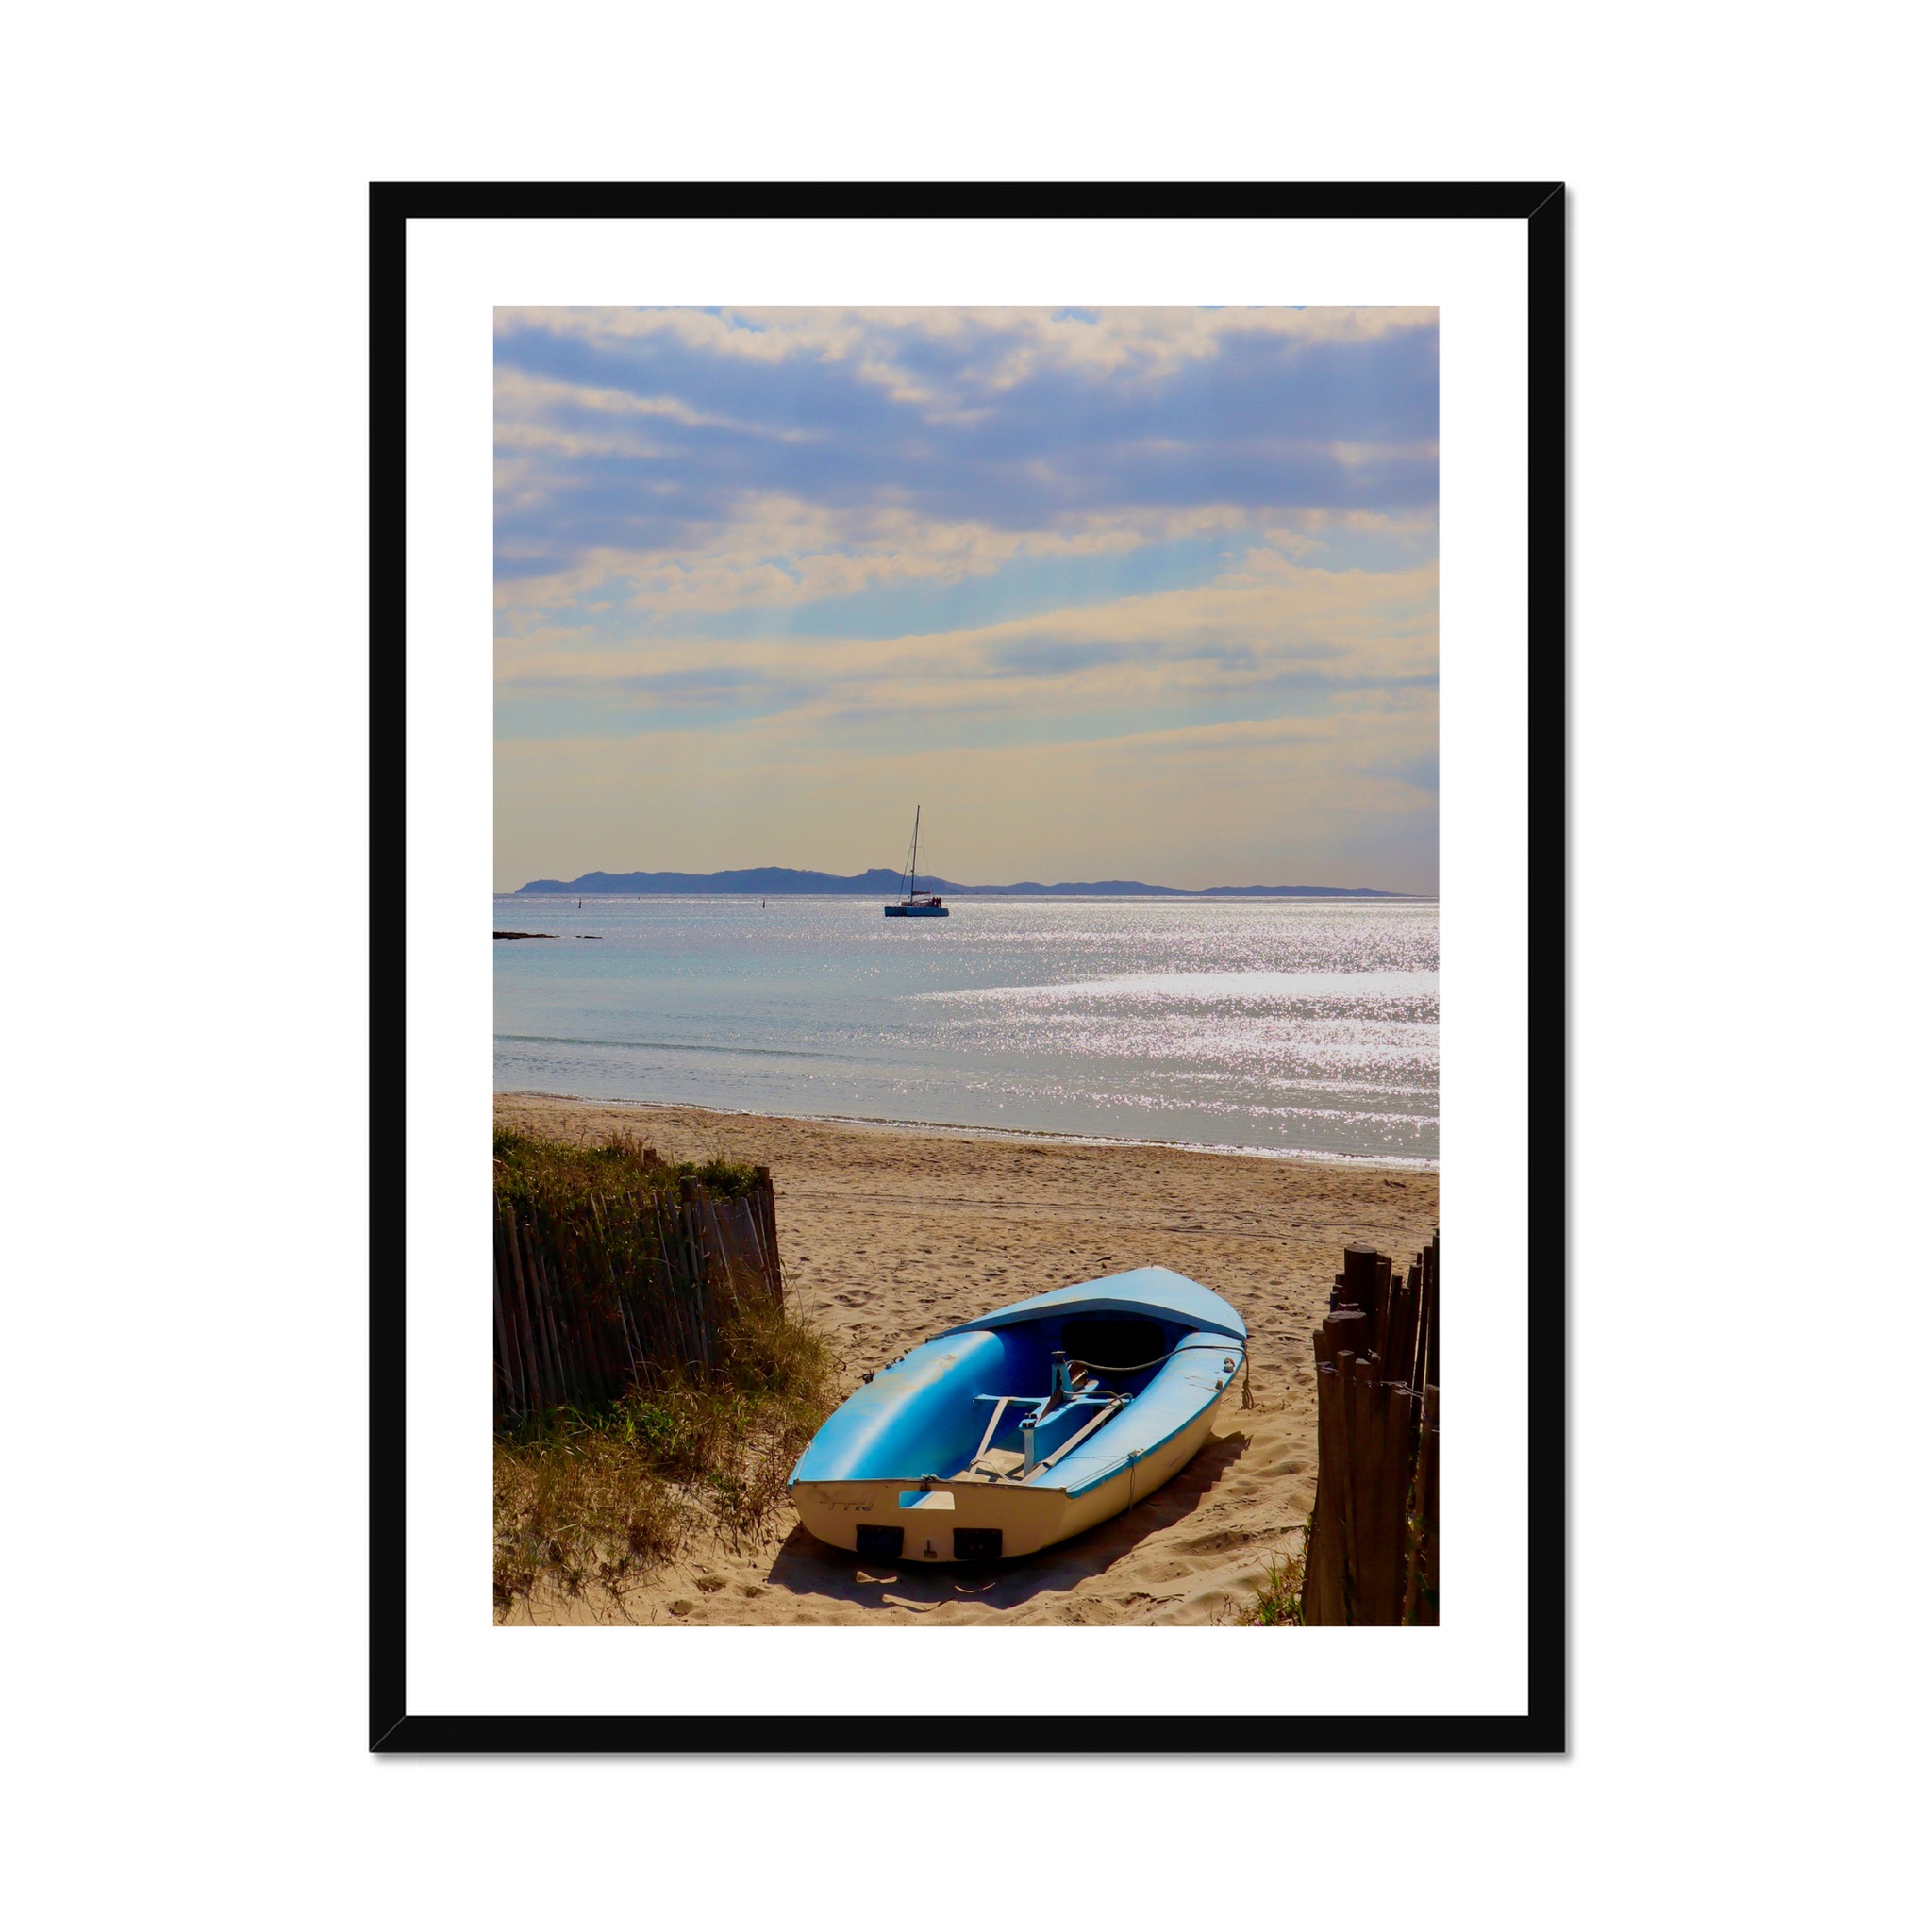 South of France Photos framed print - Boat on beach in Saint Tropez